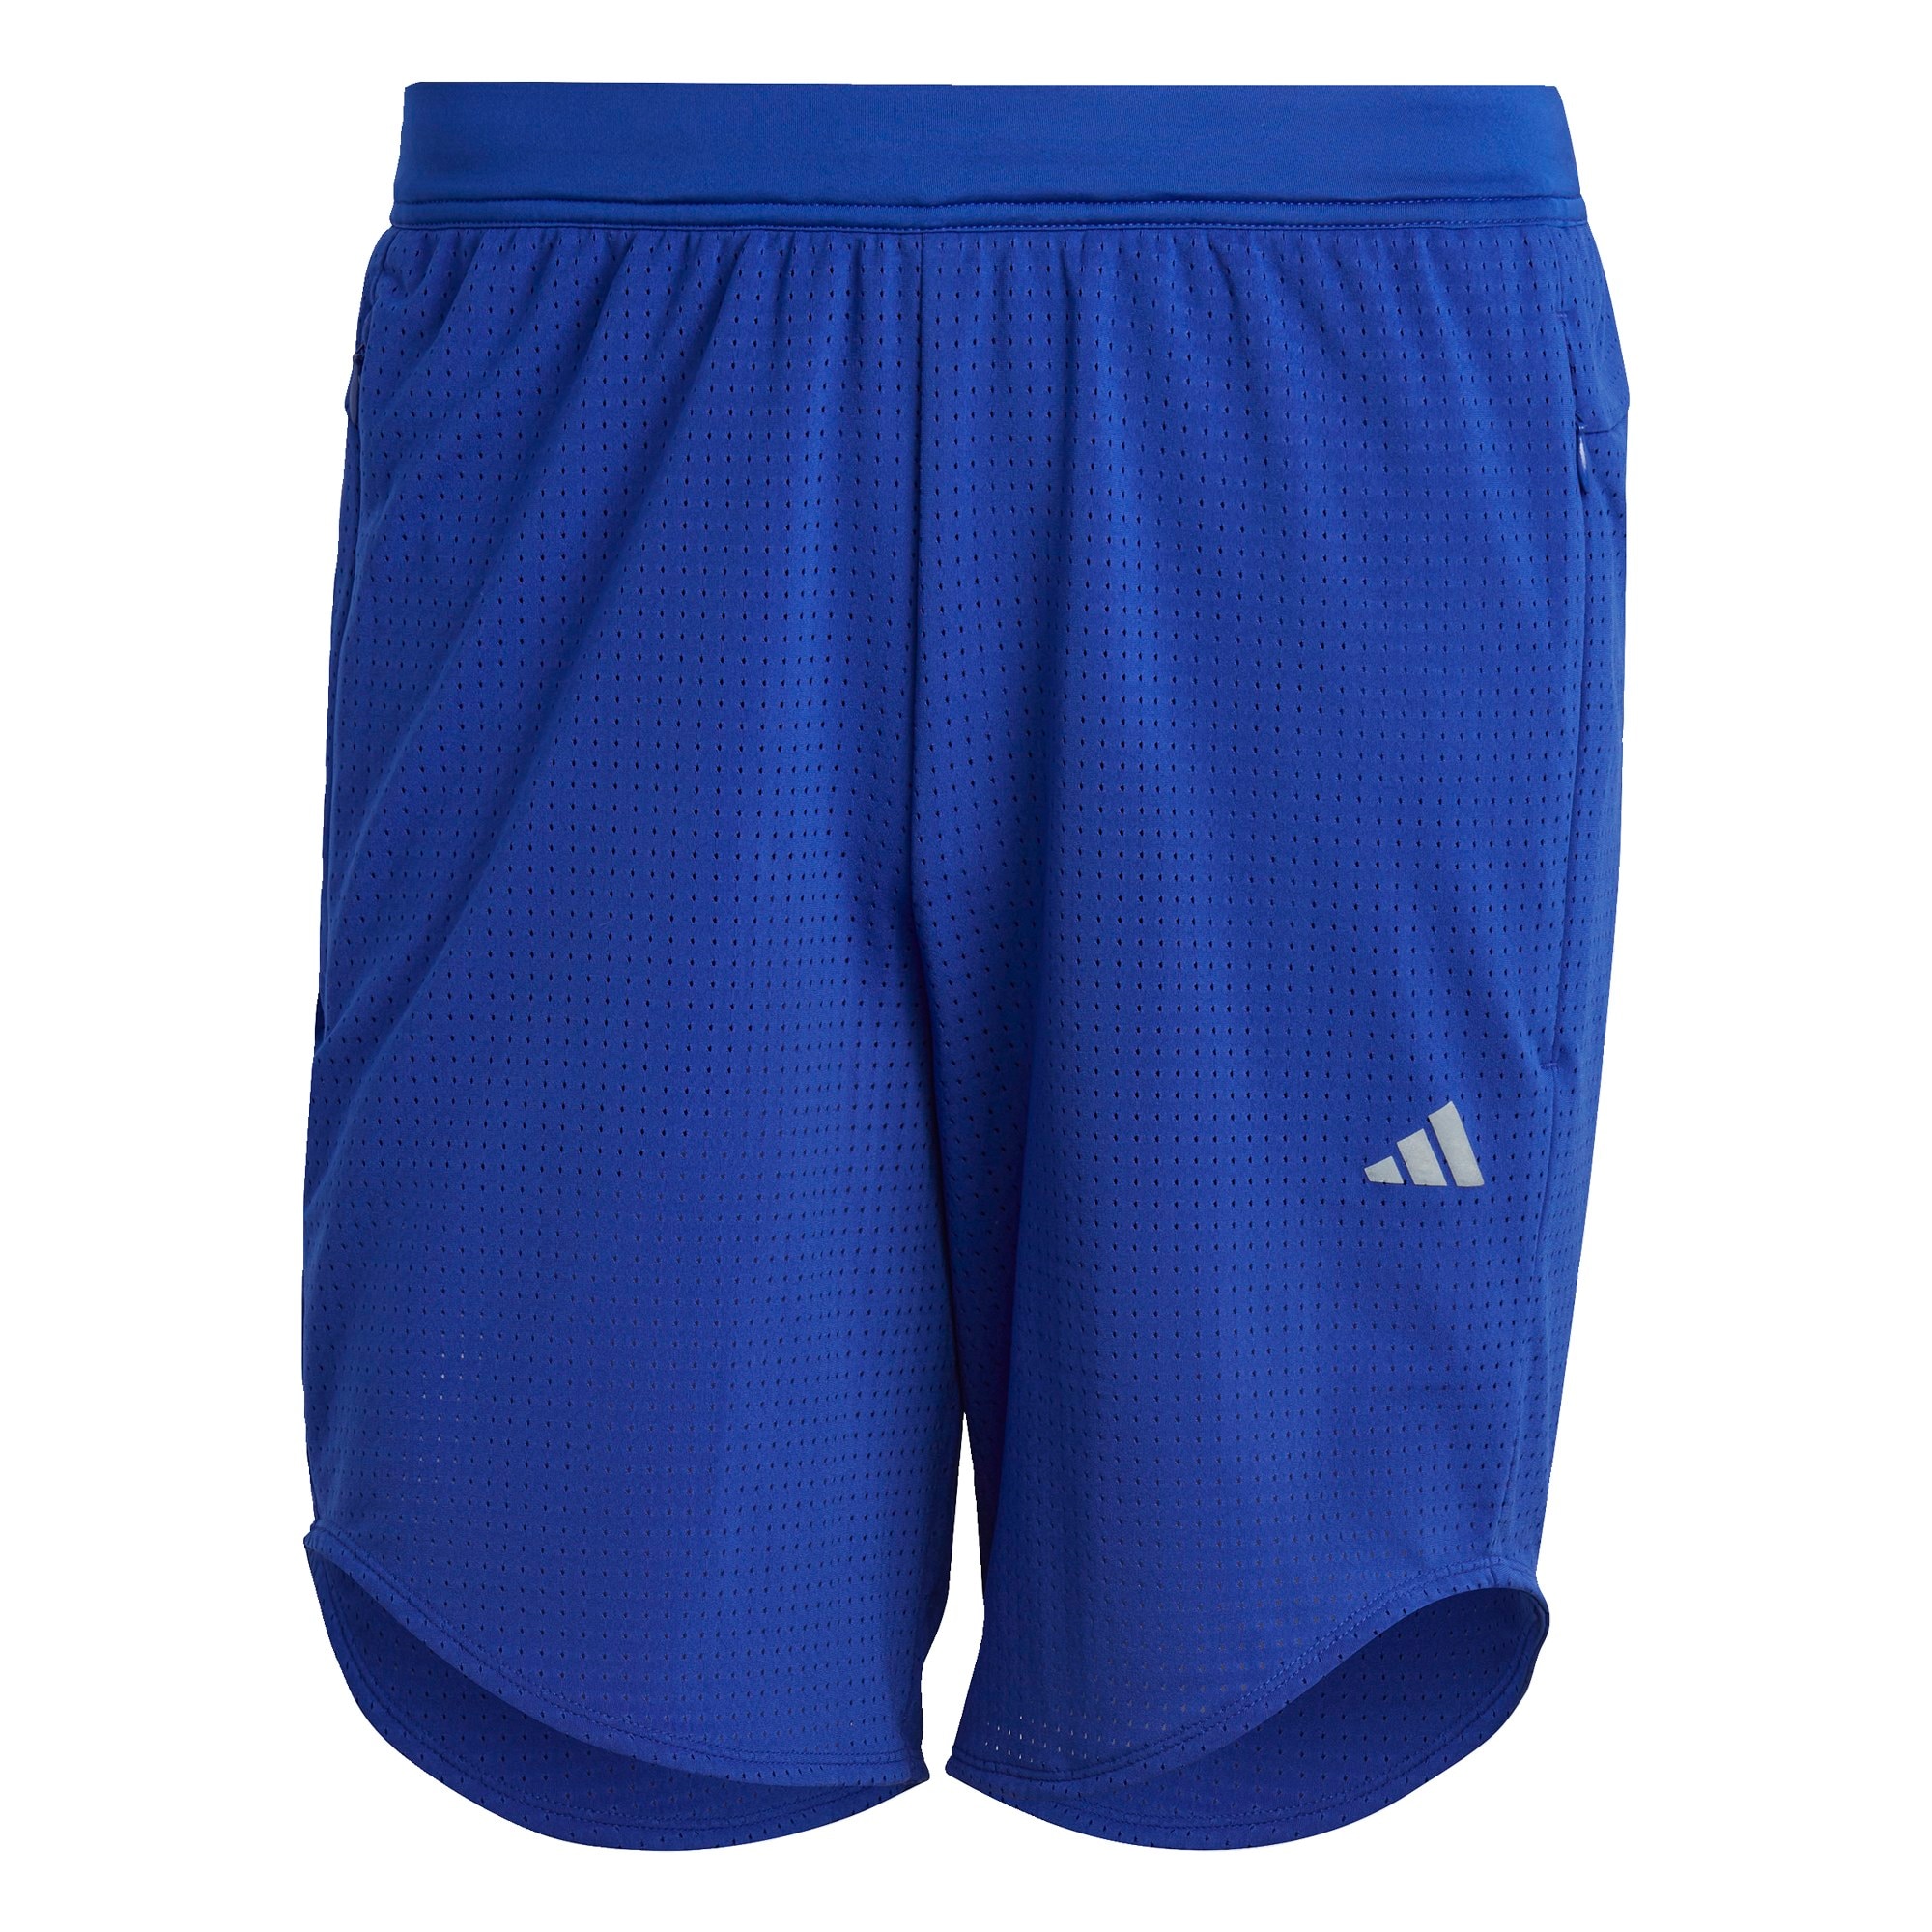 ADIDAS PERFORMANCE Športne hlače  kraljevo modra / svetlo siva